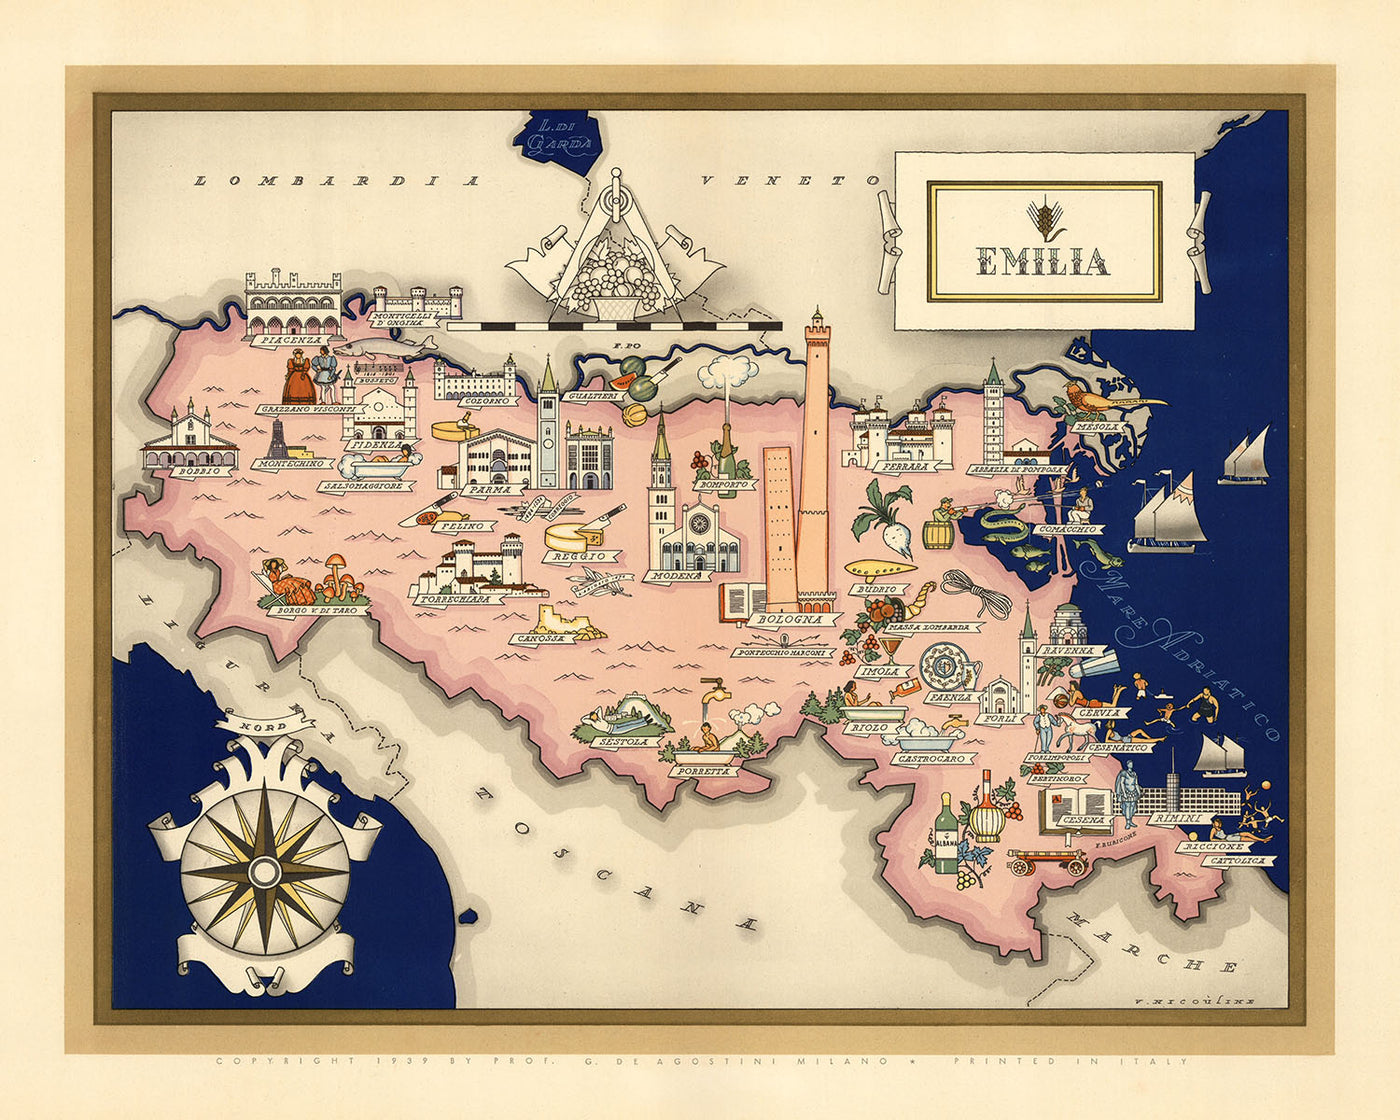 Old Map of Emilia-Romagna by De Agostini, 1938: Bologna, Ferrara, Modena, Parma, Rimini